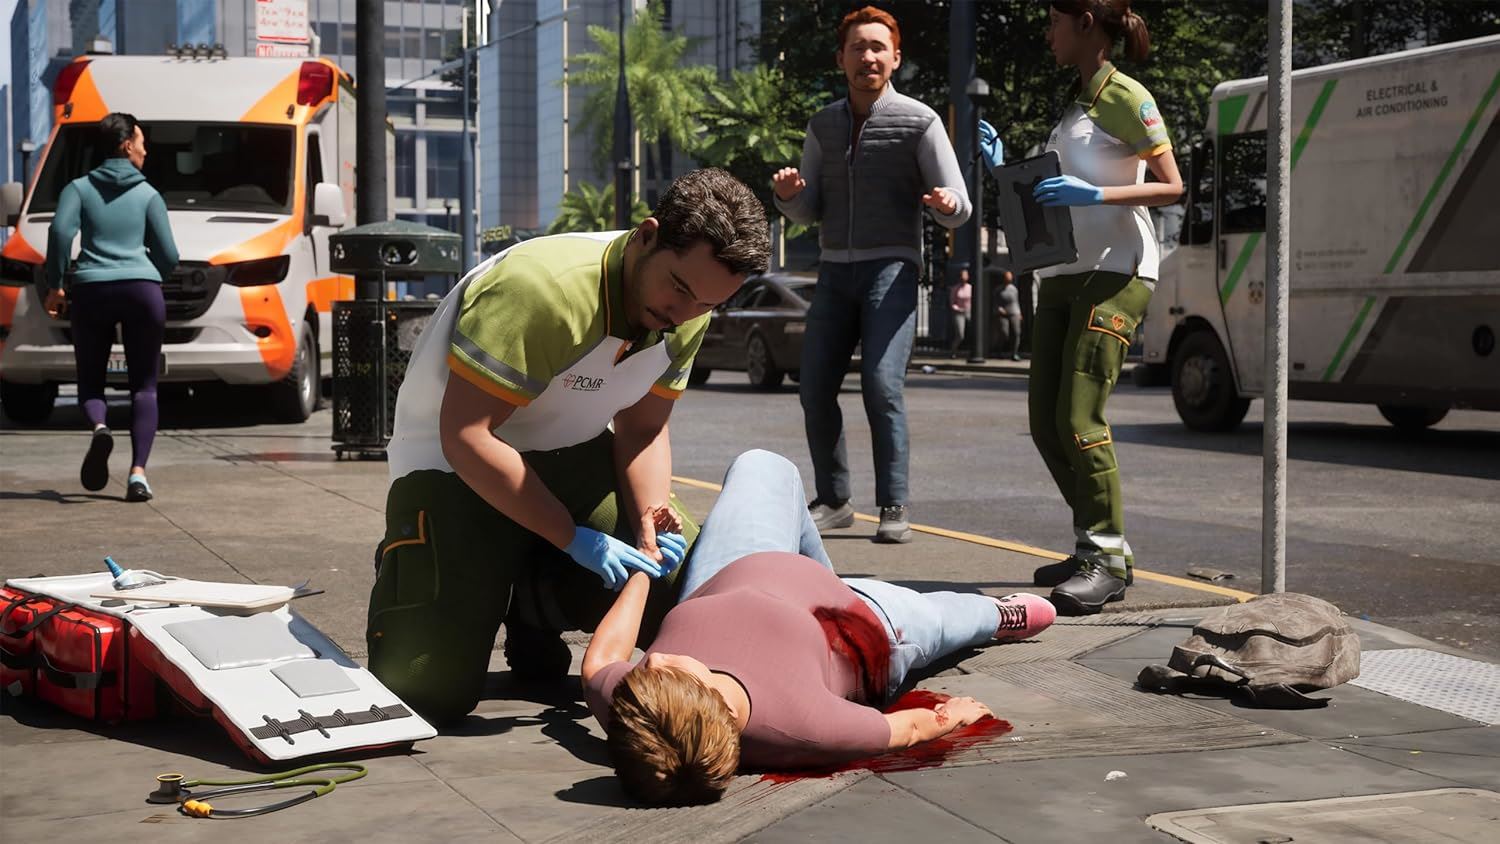 Ambulance Life: A Paramedic Simulator PS5 Game